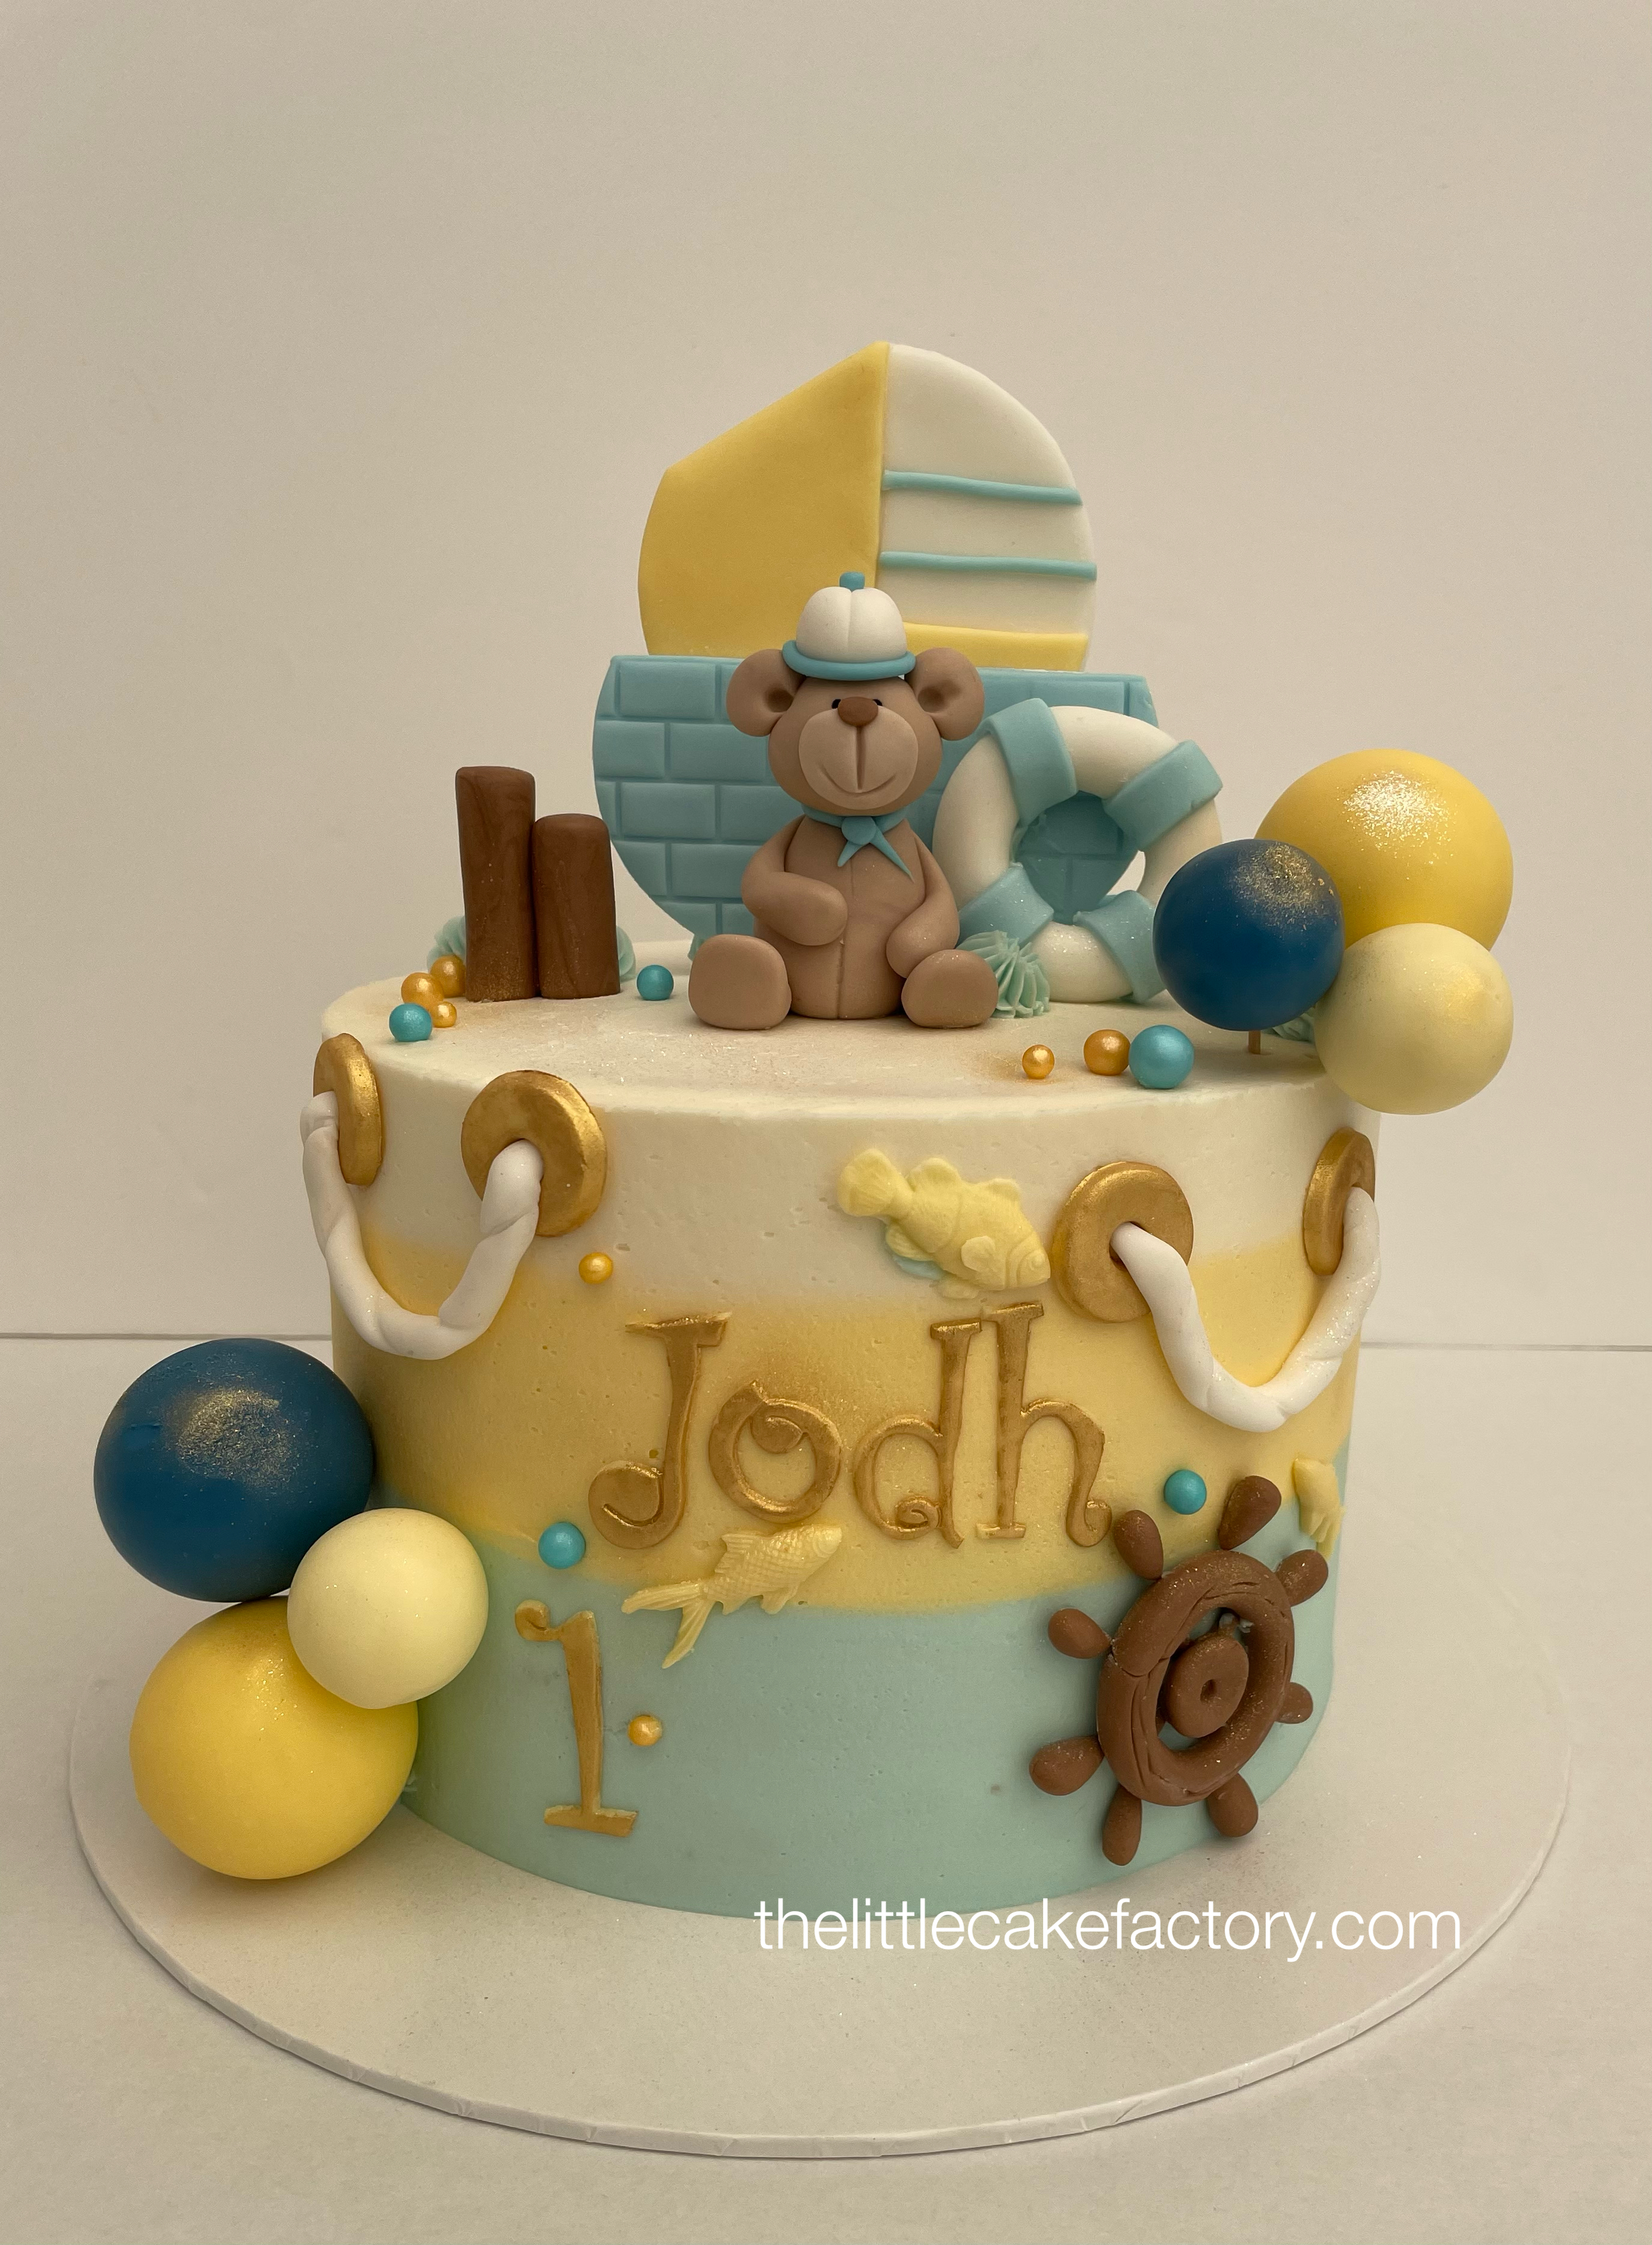 Jodh 1st birthday Cake | Children Cakes